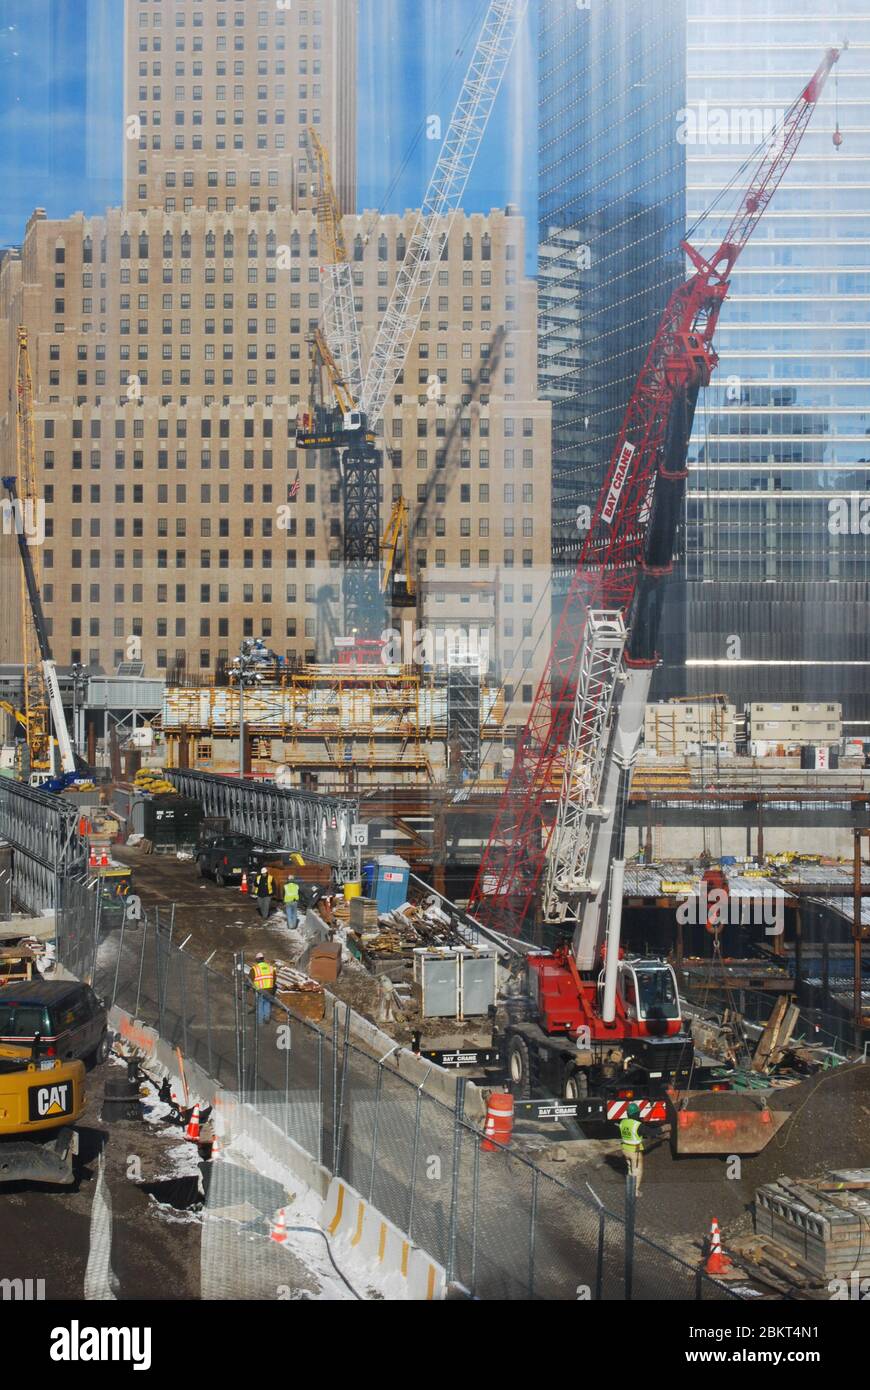 Verizon Building World Trade Center en Construcción 285 Fulton St, New York, NY Estados Unidos por Ralph Walker Foto de stock